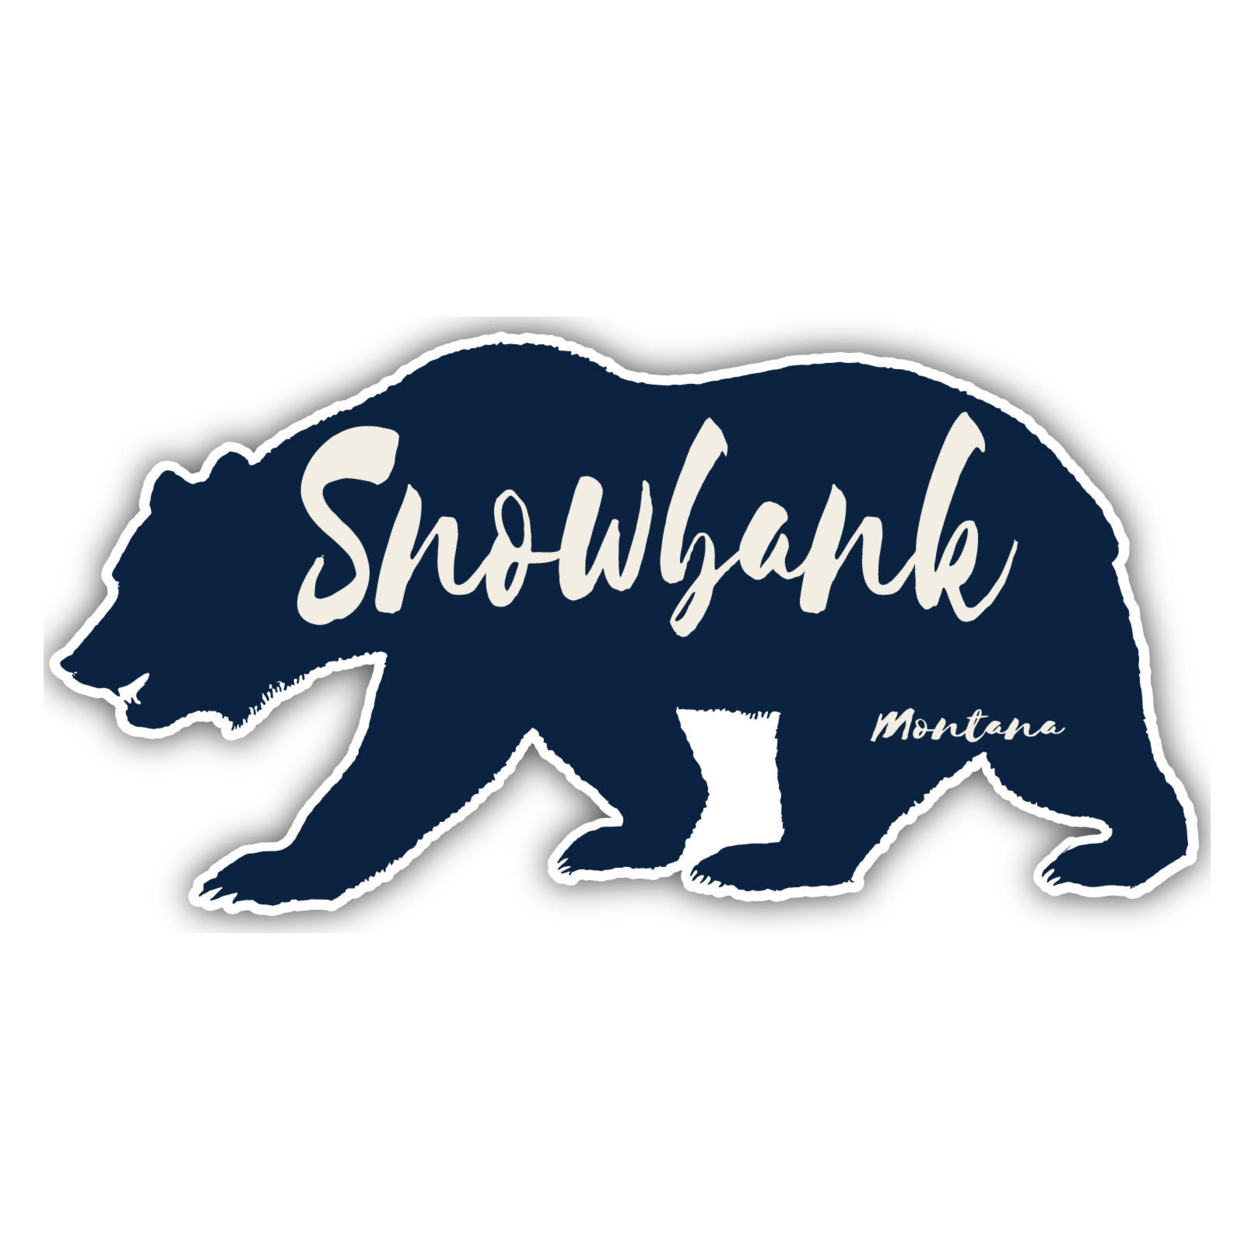 Snowbank Montana Souvenir Decorative Stickers (Choose Theme And Size) - Single Unit, 4-Inch, Bear